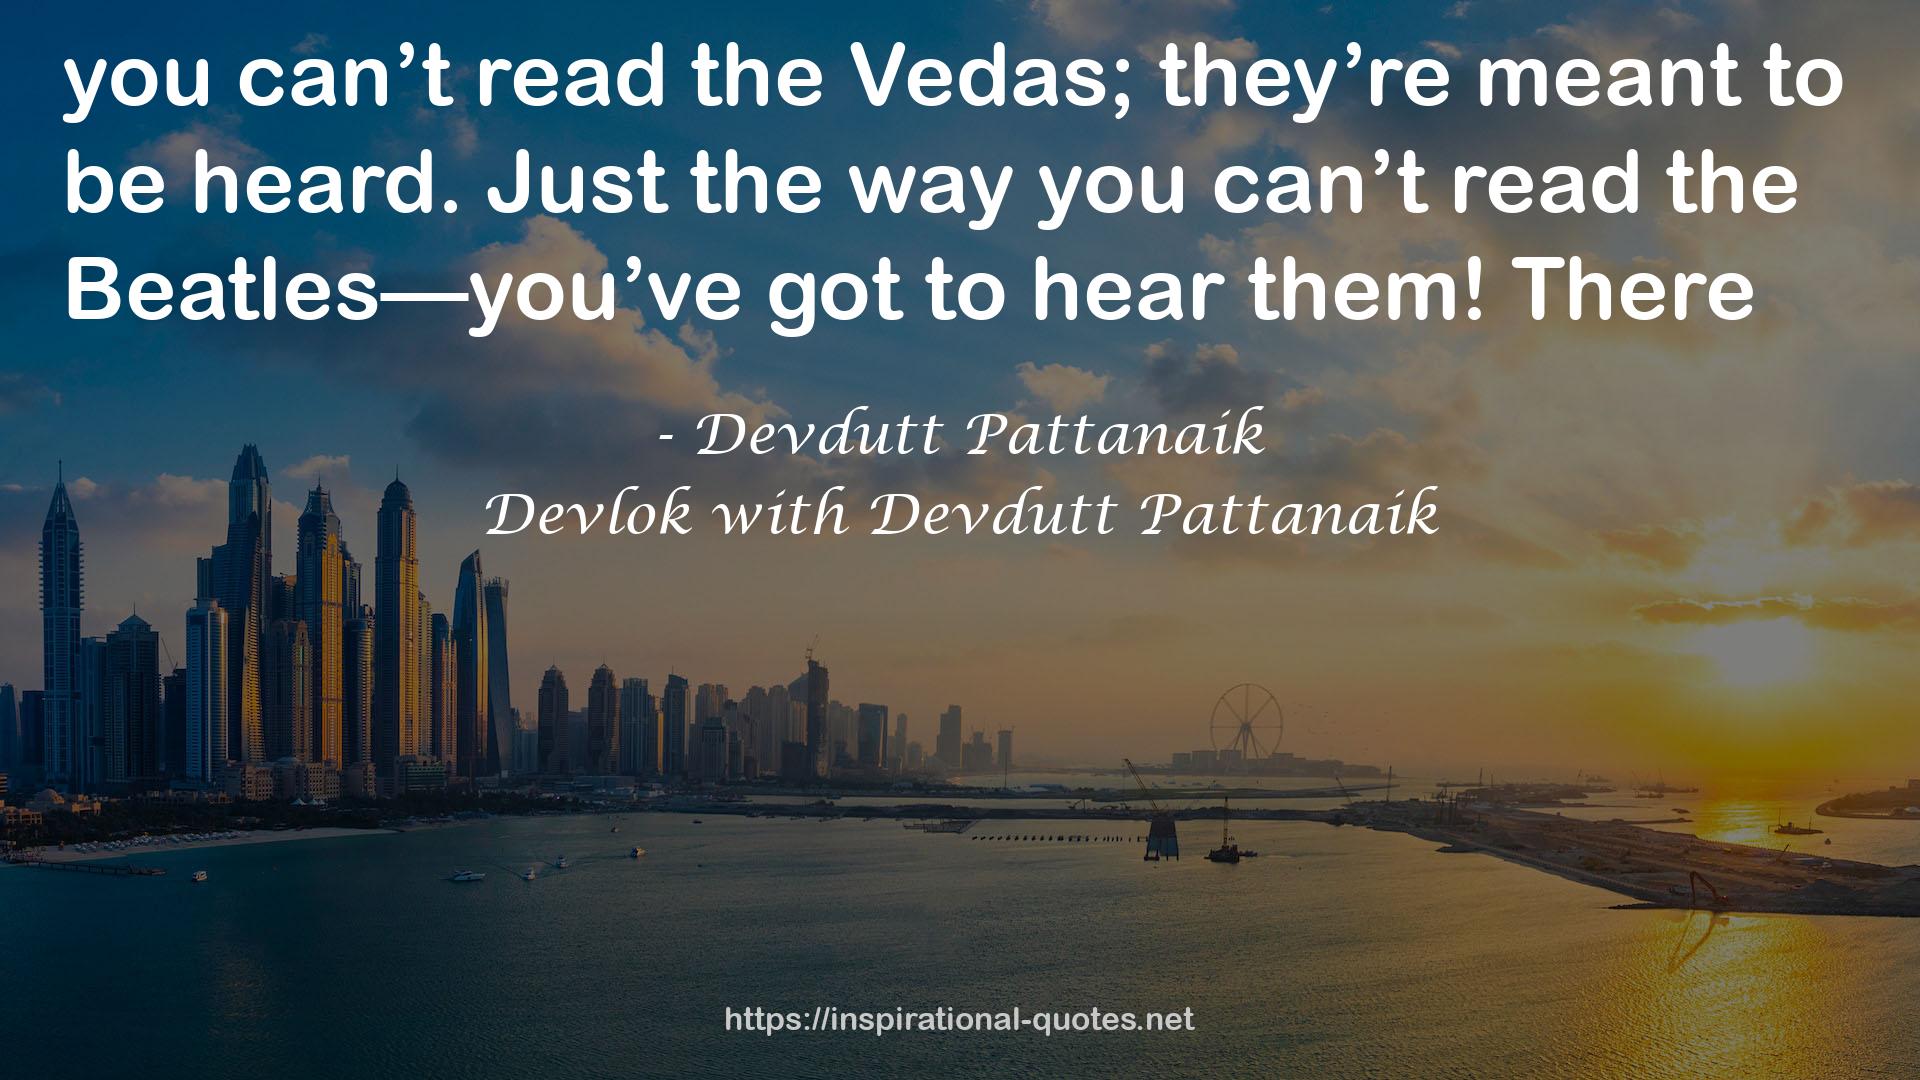 Devlok with Devdutt Pattanaik QUOTES